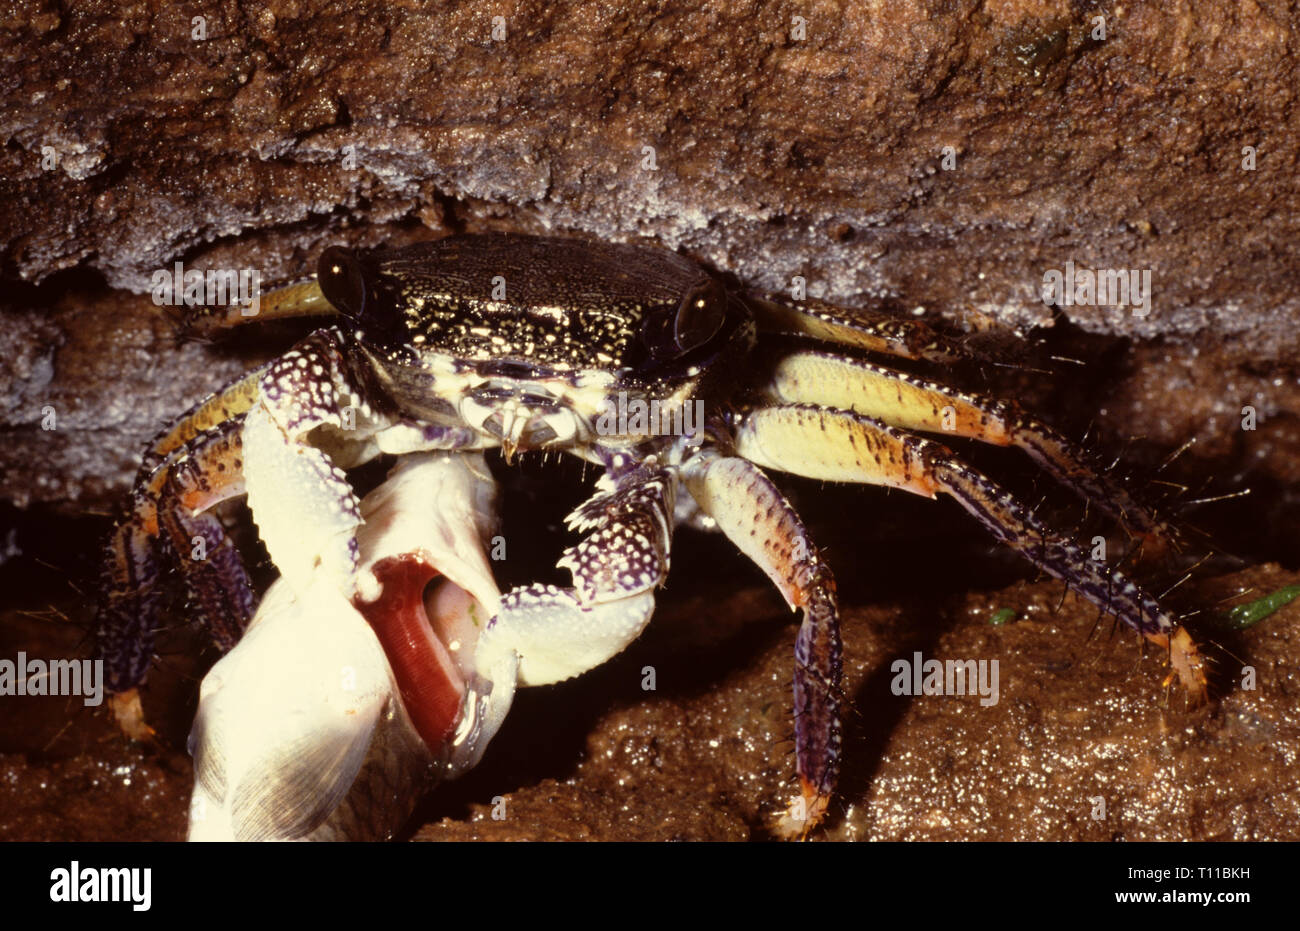 Mangrove crab (Goniopsis pelii) feeding a fish Stock Photo